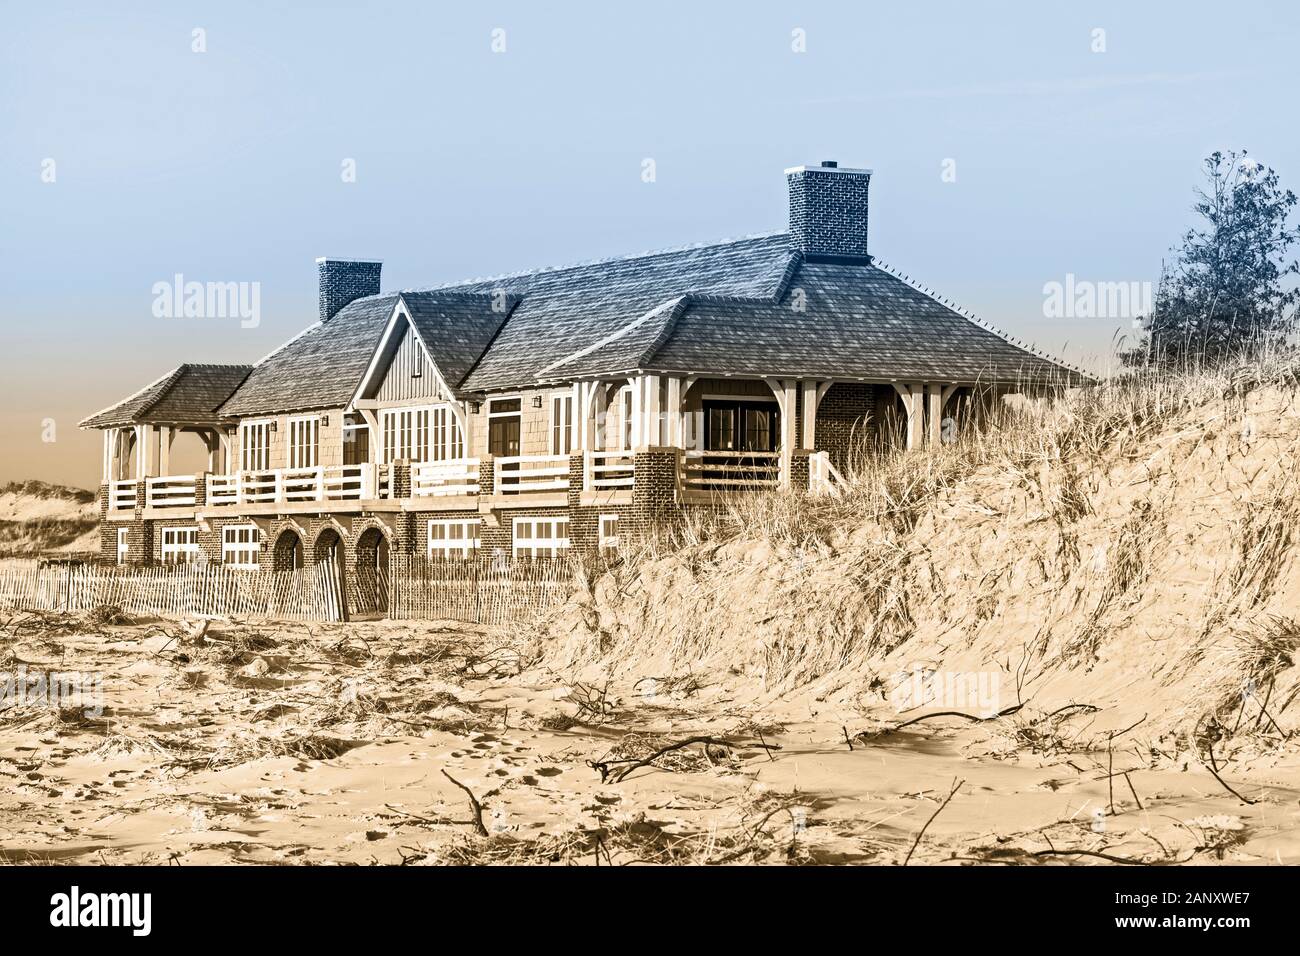 Ludington State Park Beach House auf Sturm übersät Strand in Ludington, Michigan, USA. Ludington State Park ist ein State Park nördlich von L Stockfoto